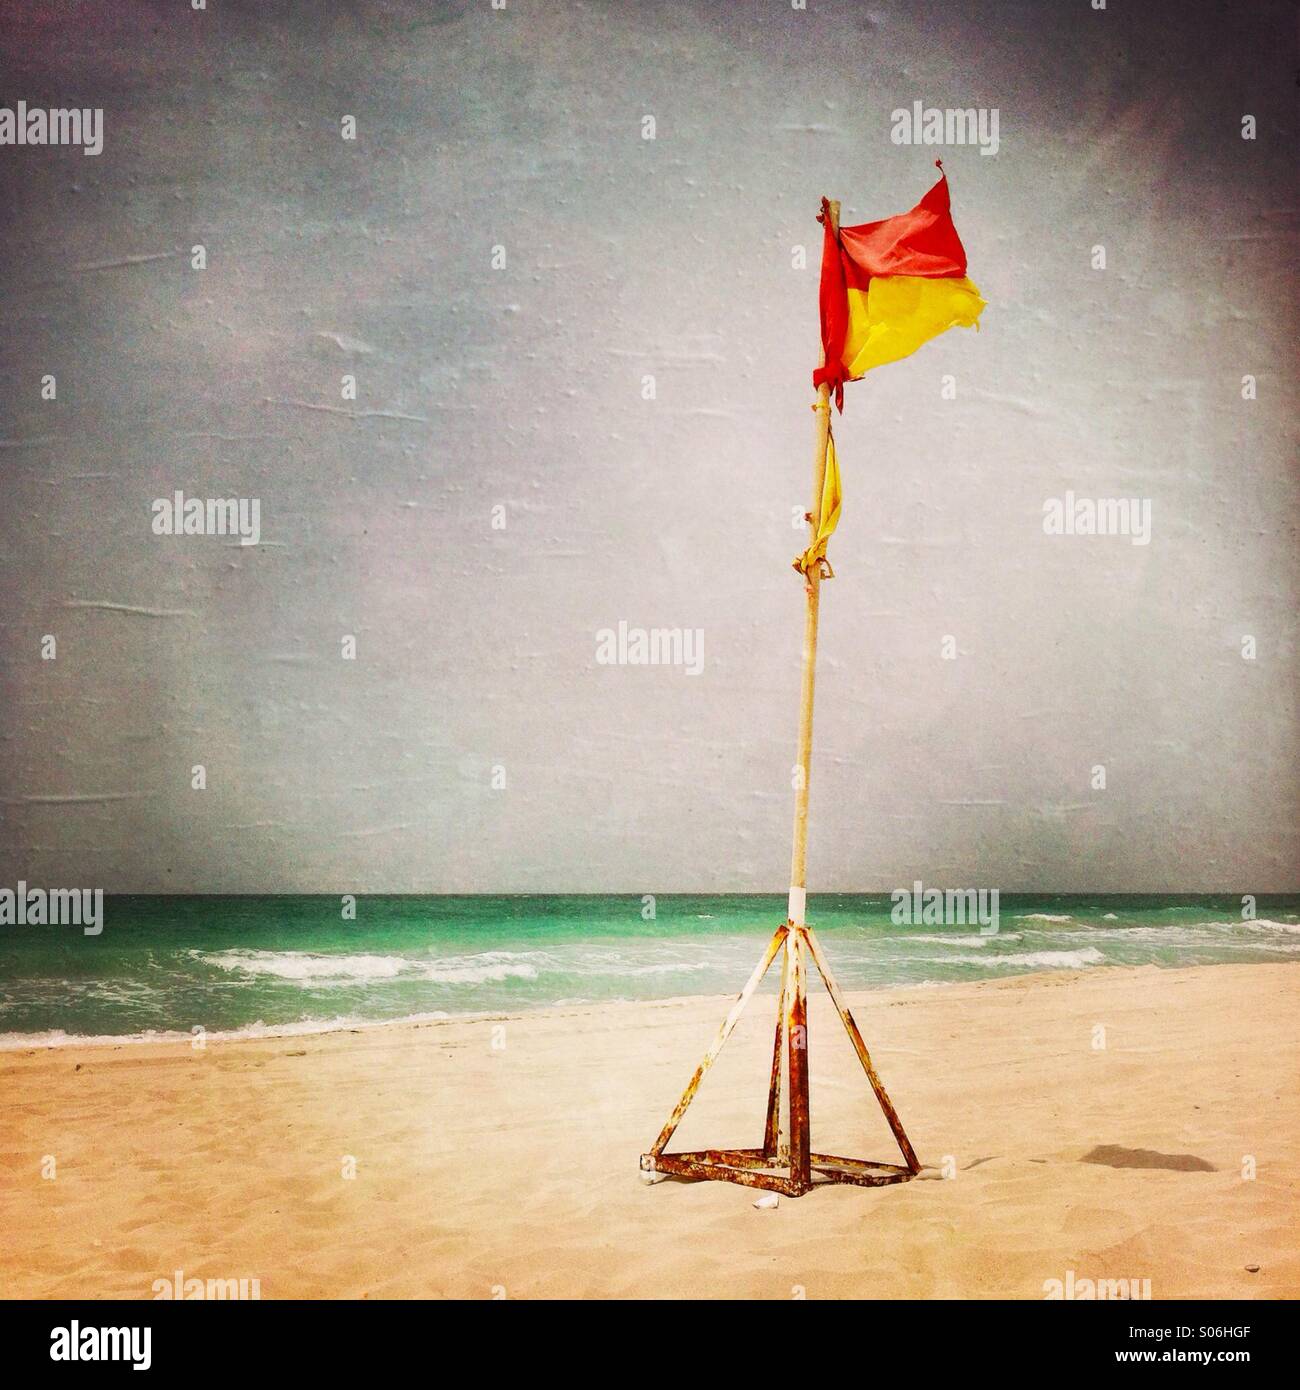 Safety flag on the beach. Abu Dhabi, UAE Stock Photo